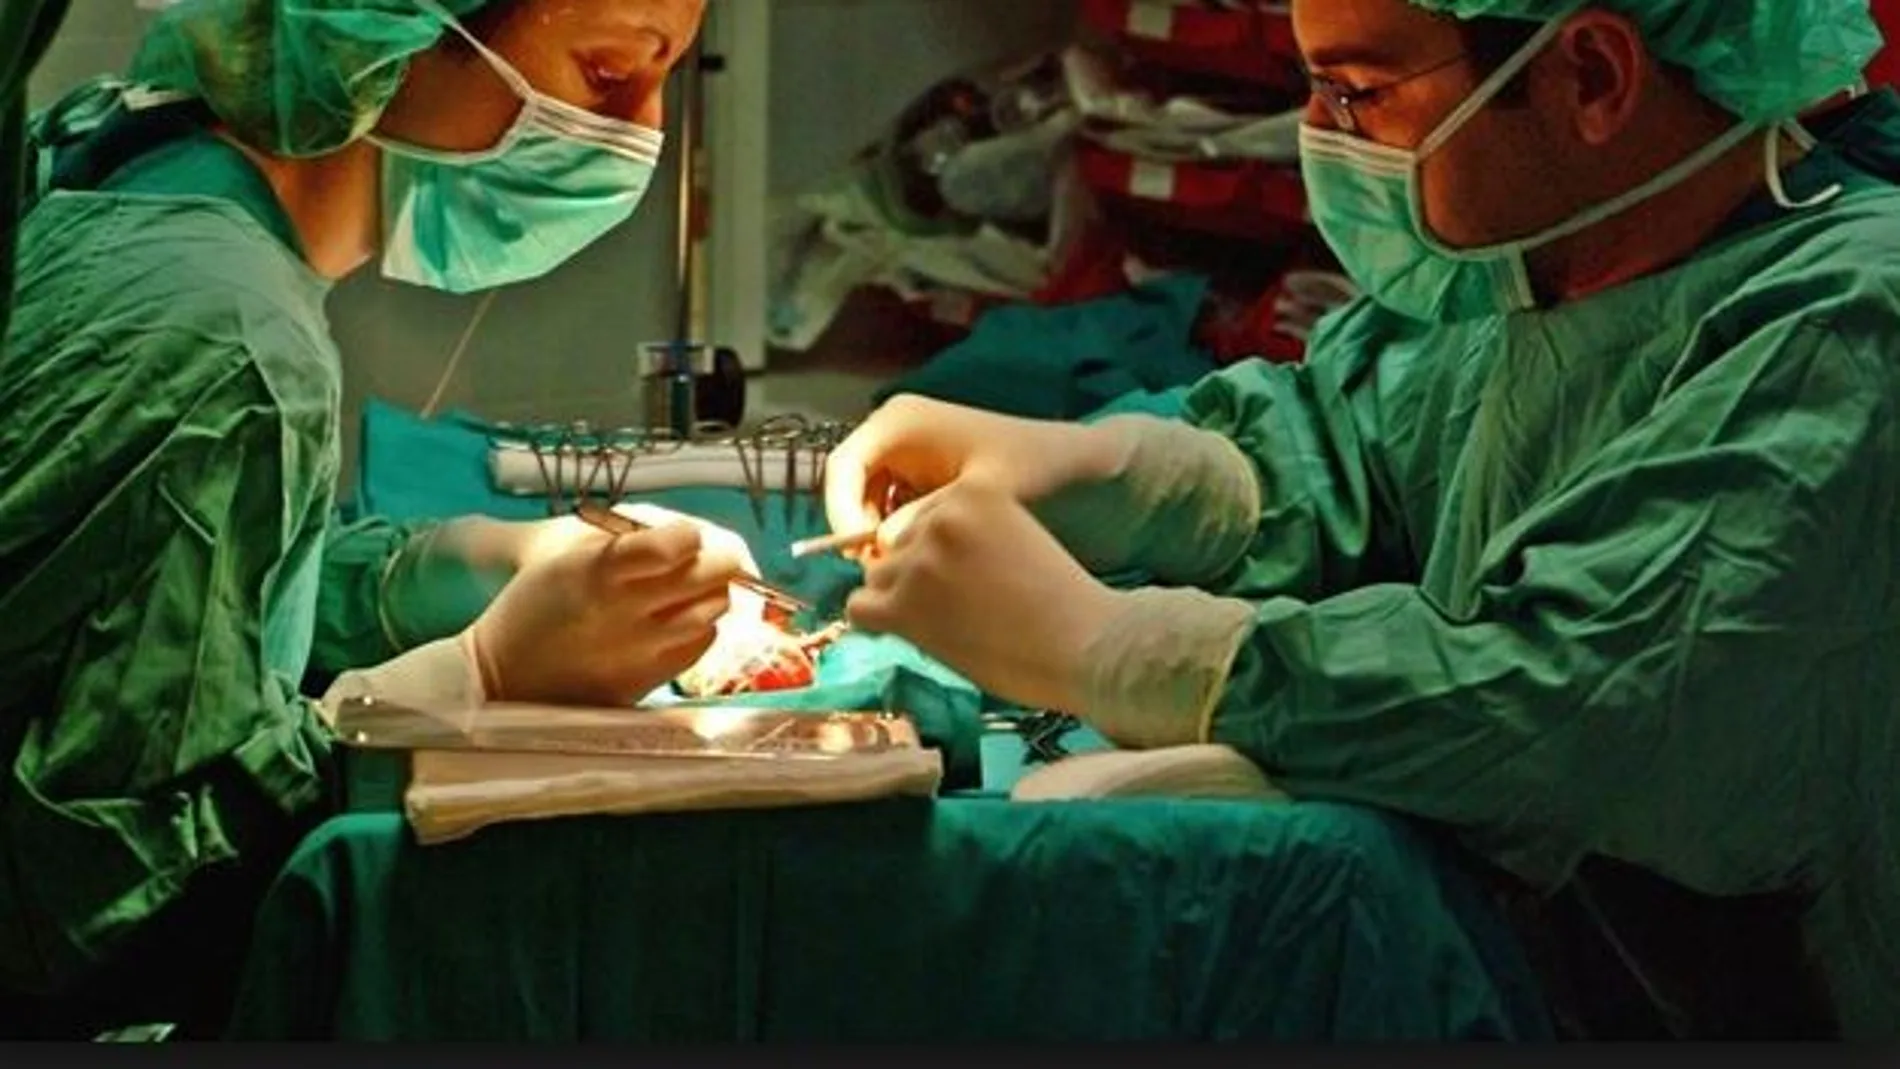 En España se han hecho ya dos trasplantes cardiacos con donantes virus C positivo «con buenos resultados».